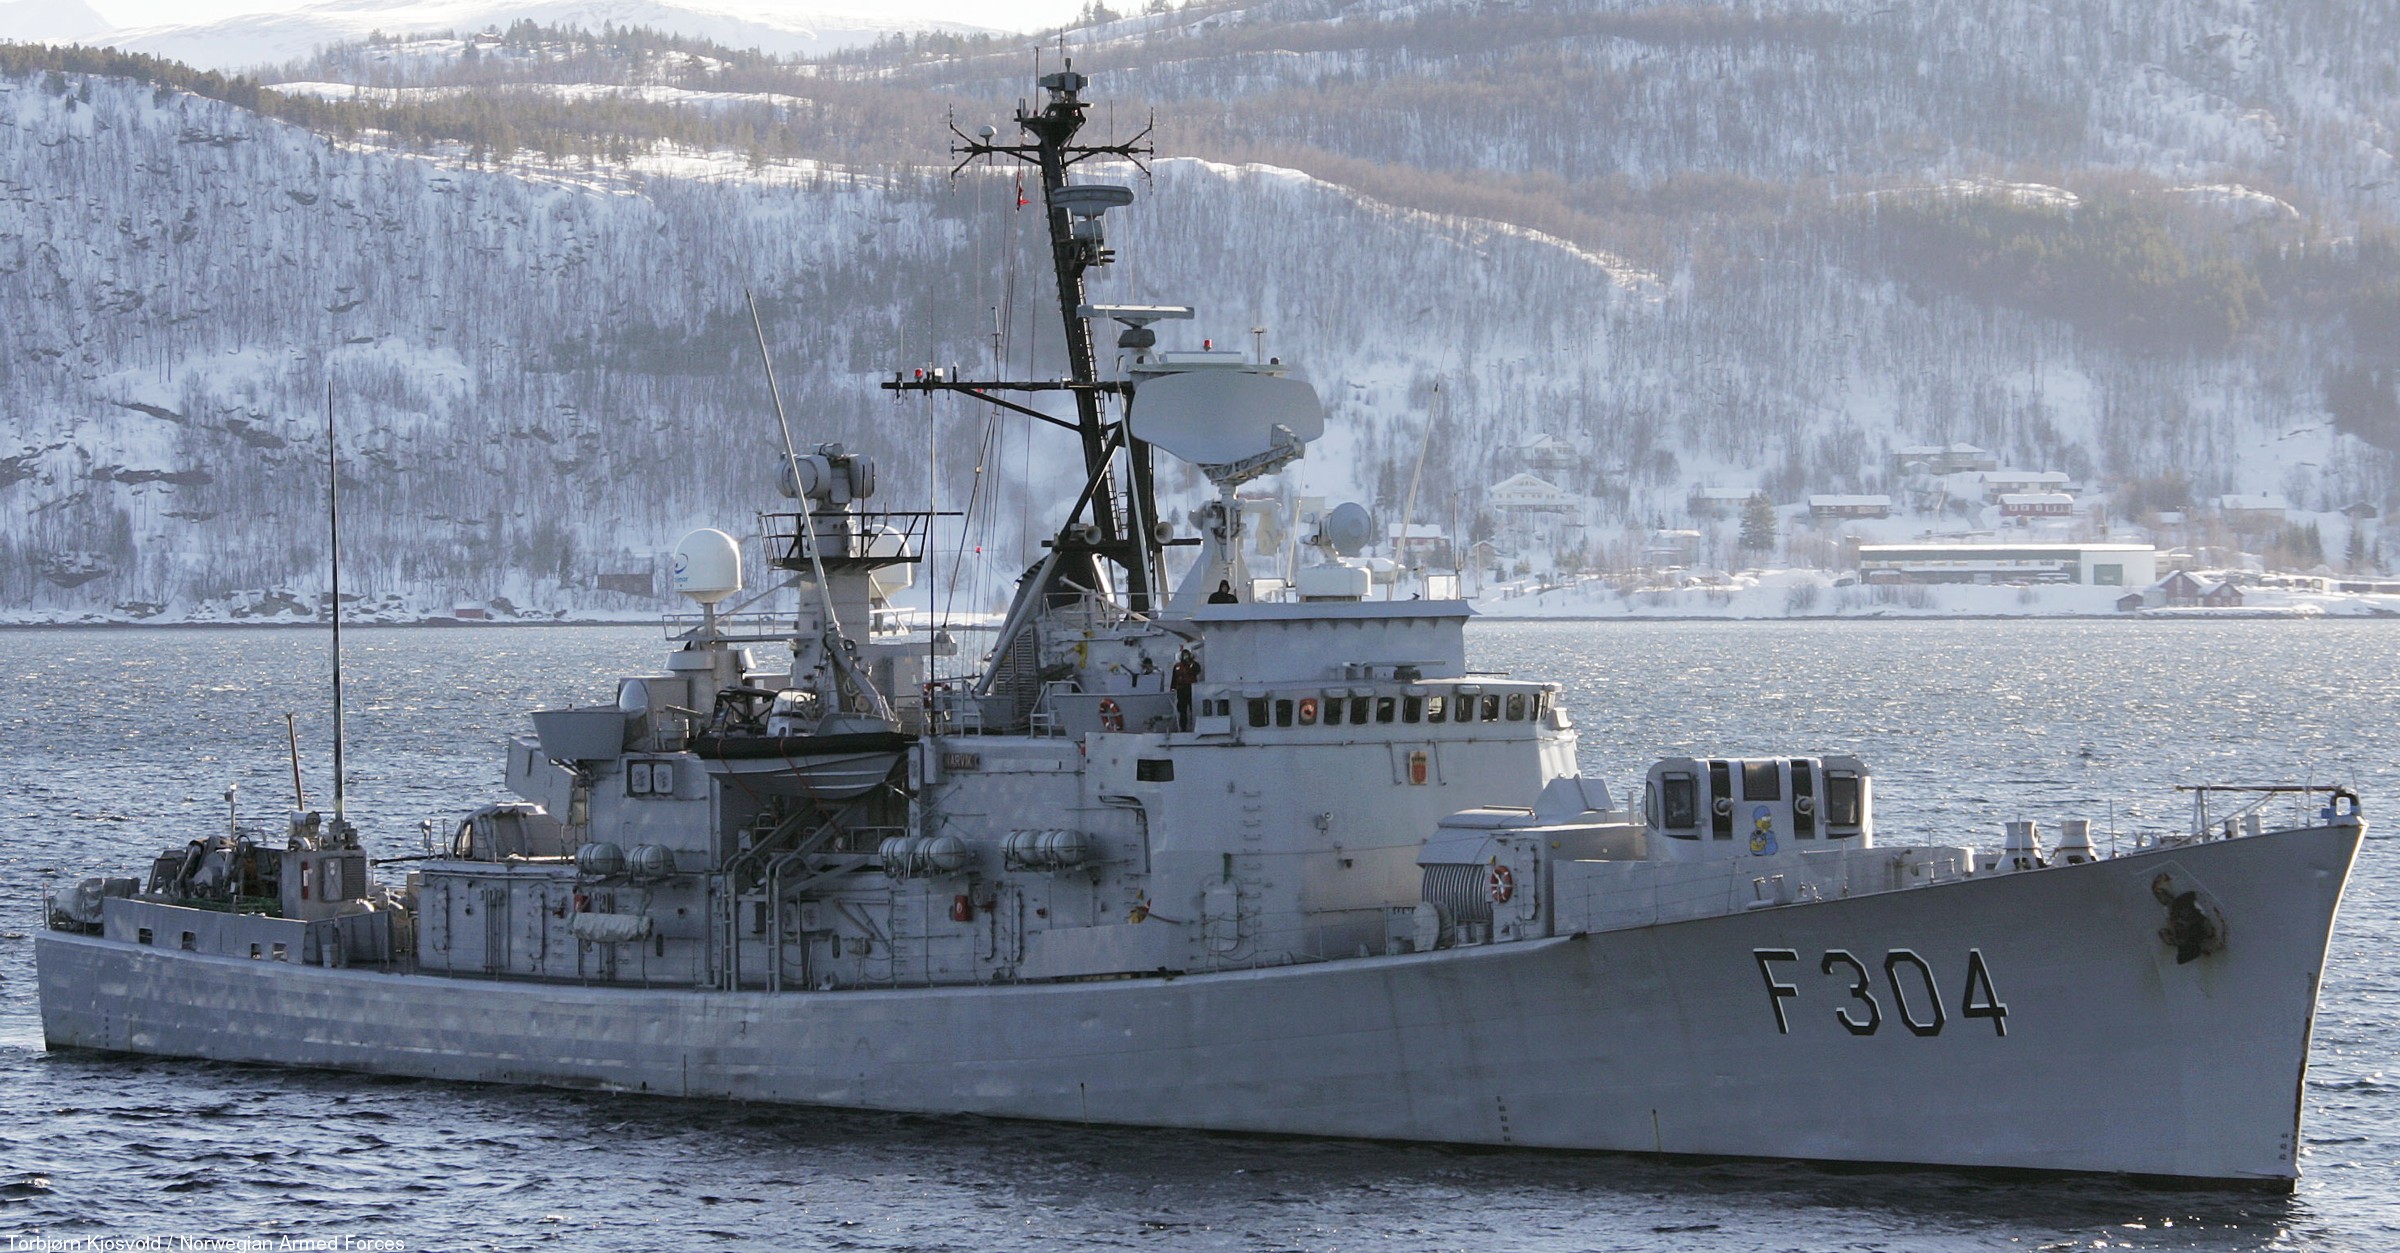 oslo class frigate royal norwegian navy hnoms knm bergen trondheim stavanger narvik sjoforsvaret 07x